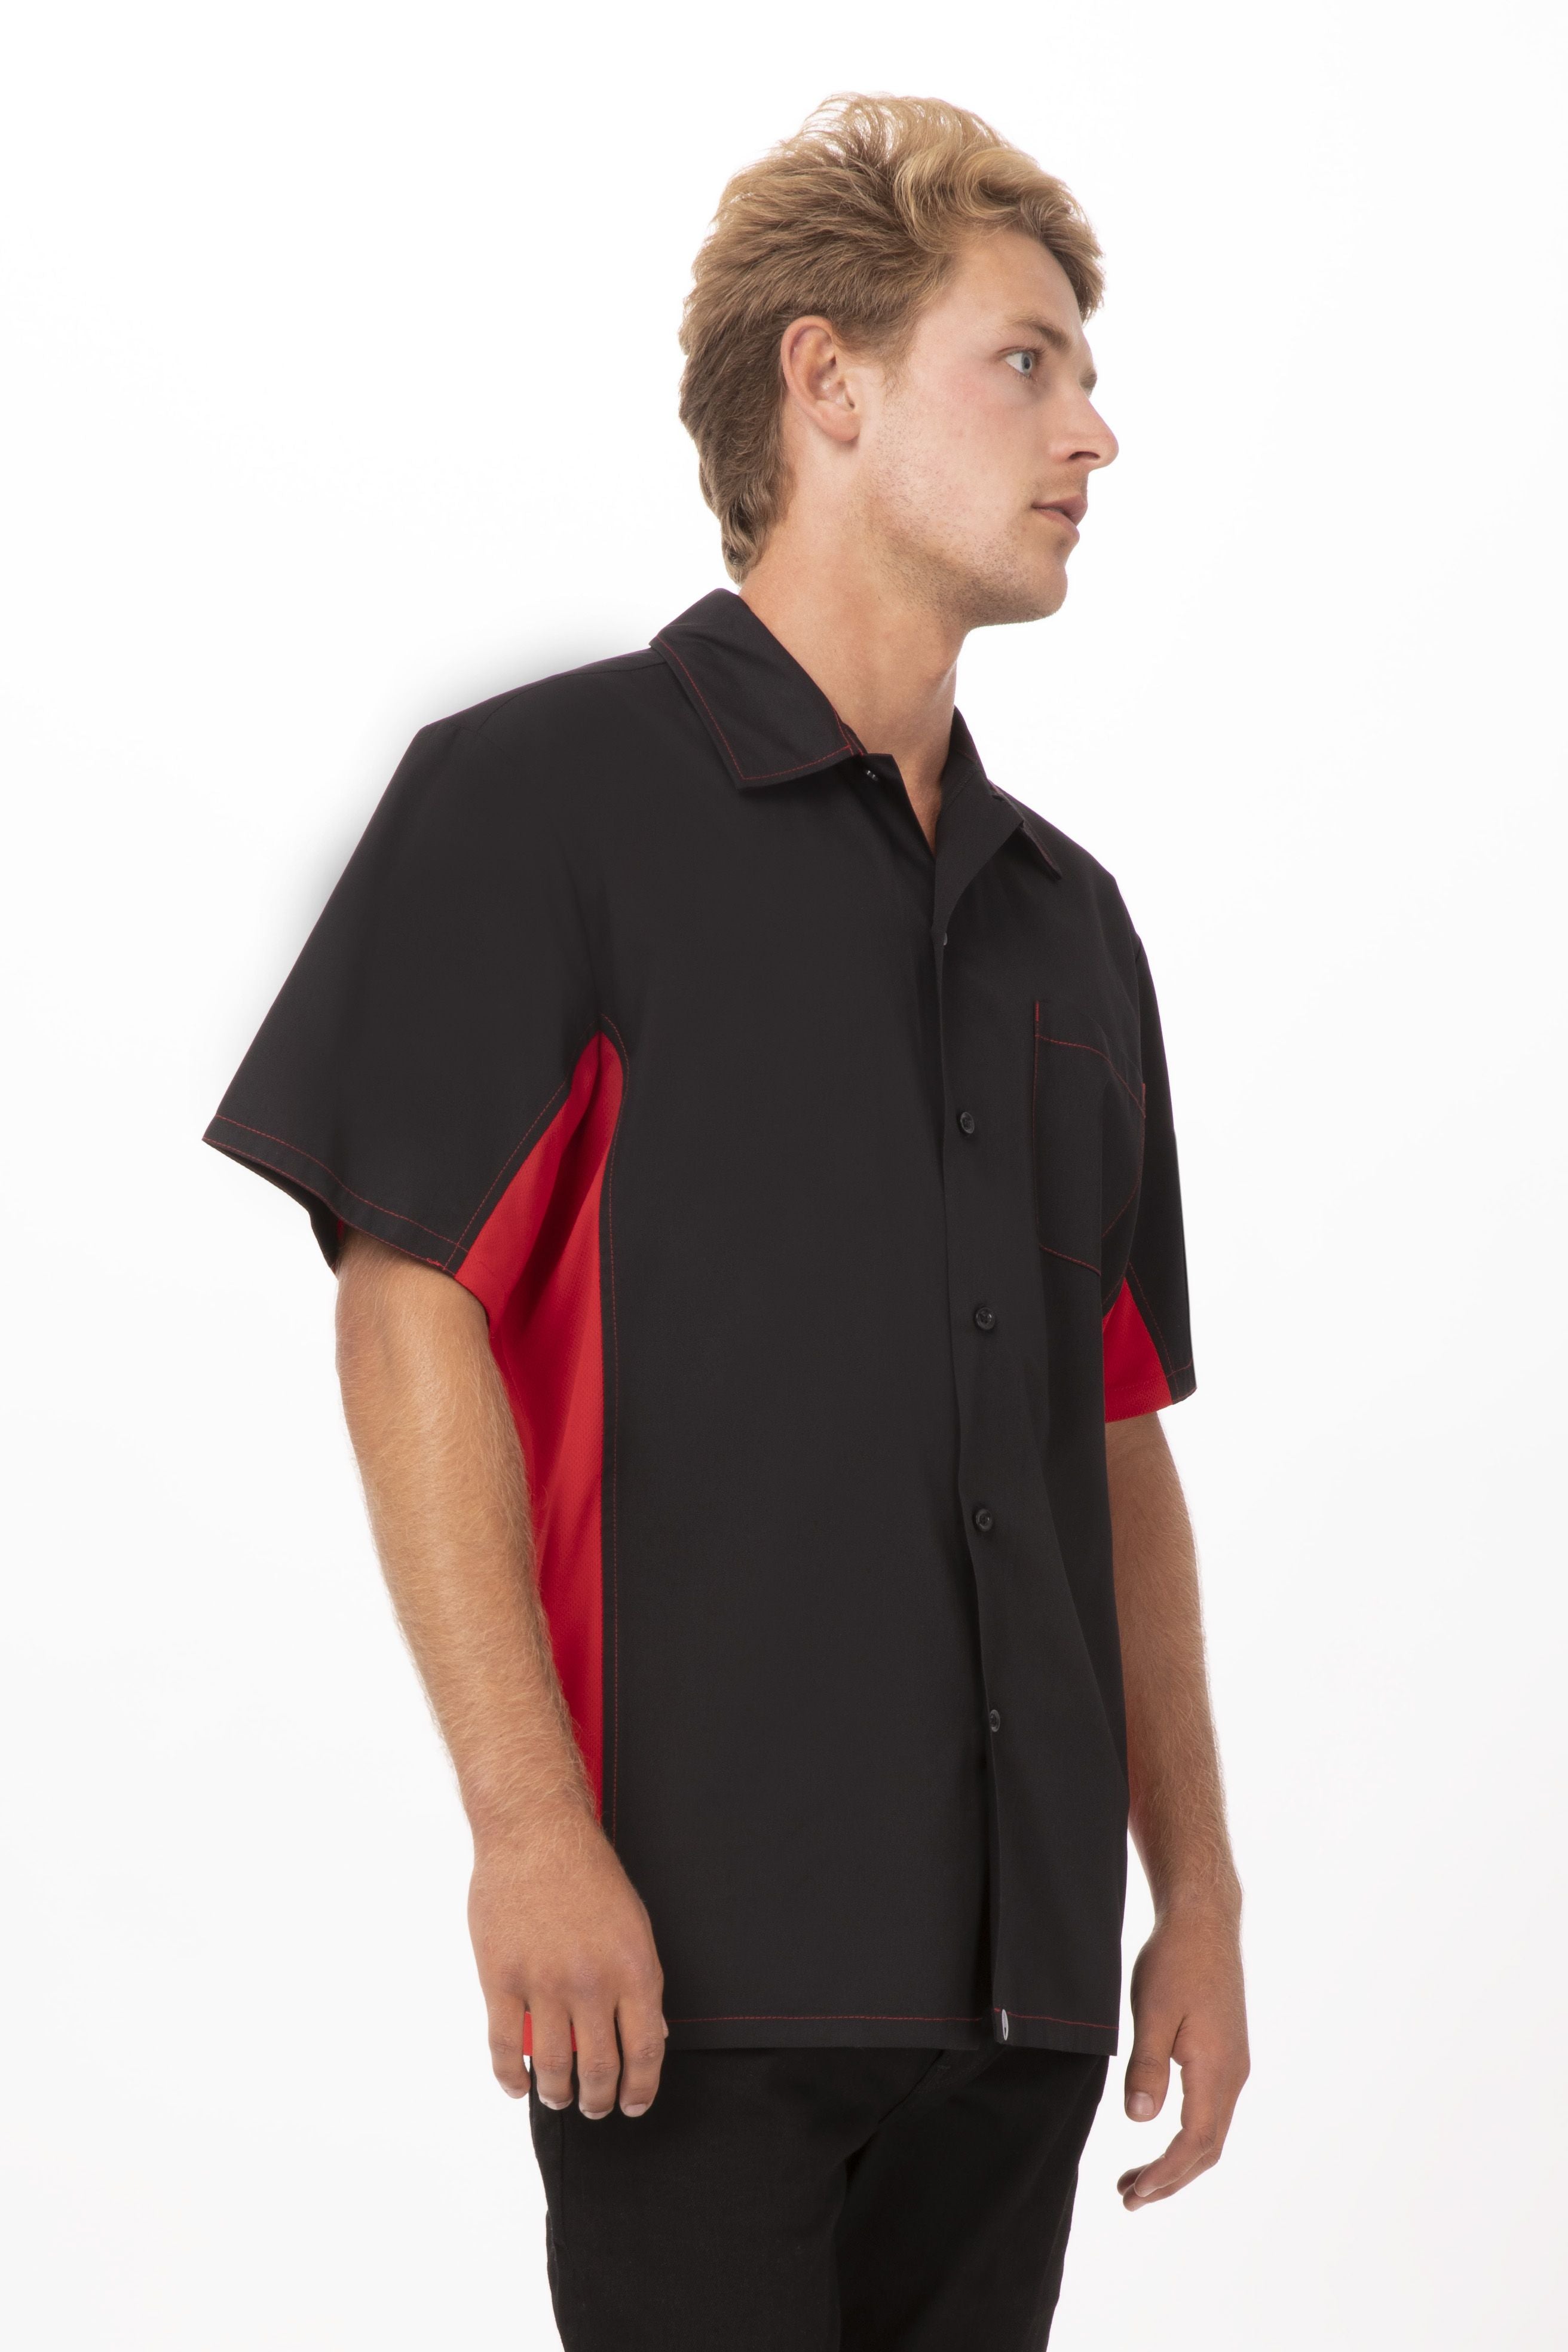 chef-works-universal-contrast-shirt-black-red-mesh